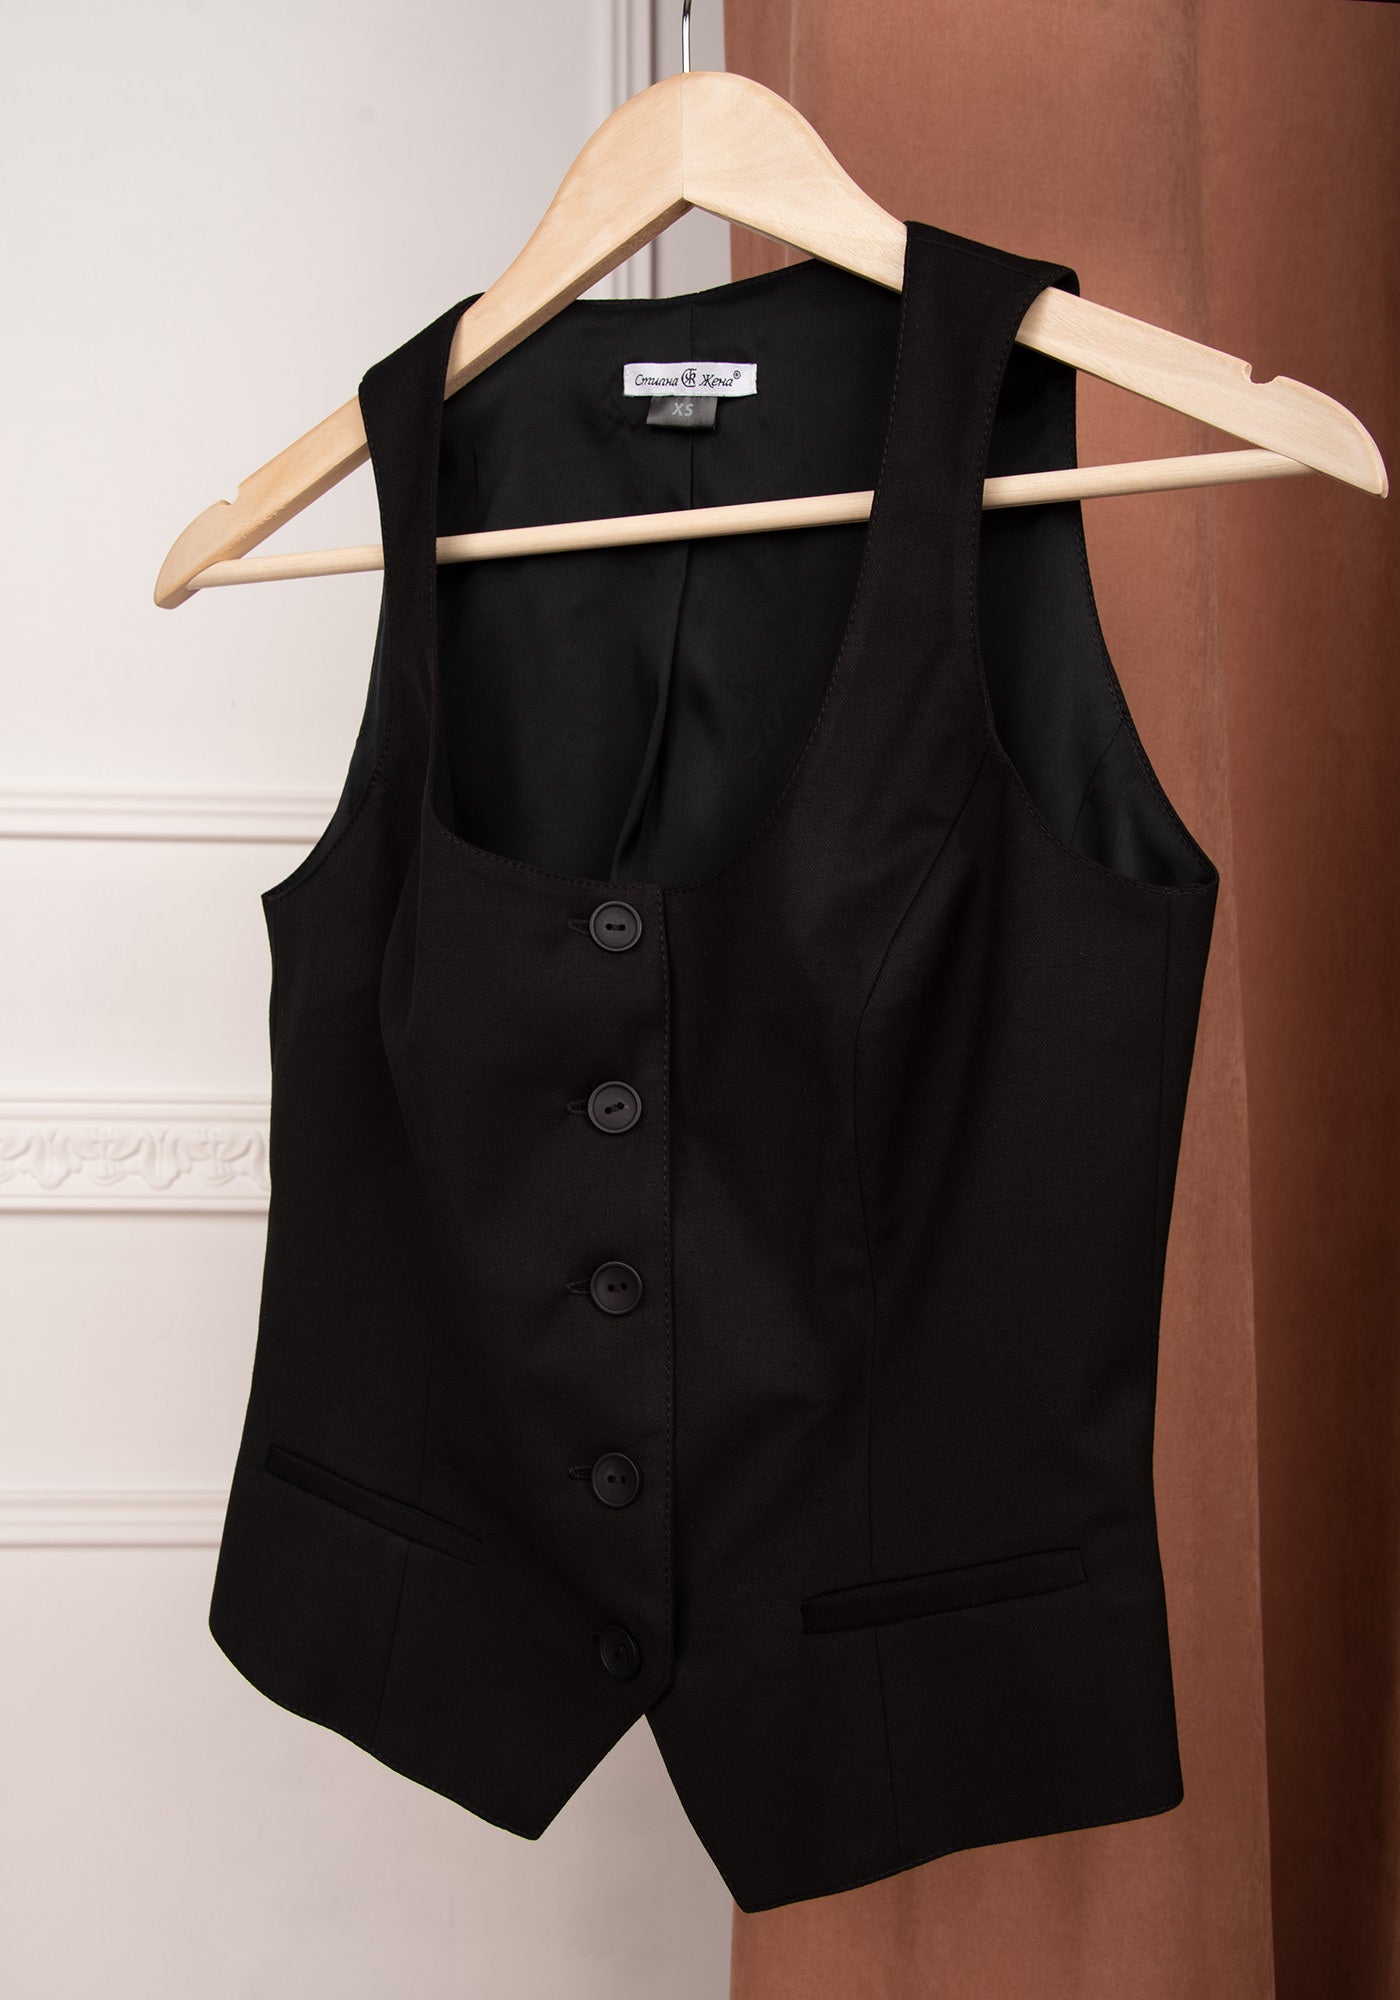 Women's Square Neckline Tailored Button up Vest in Black